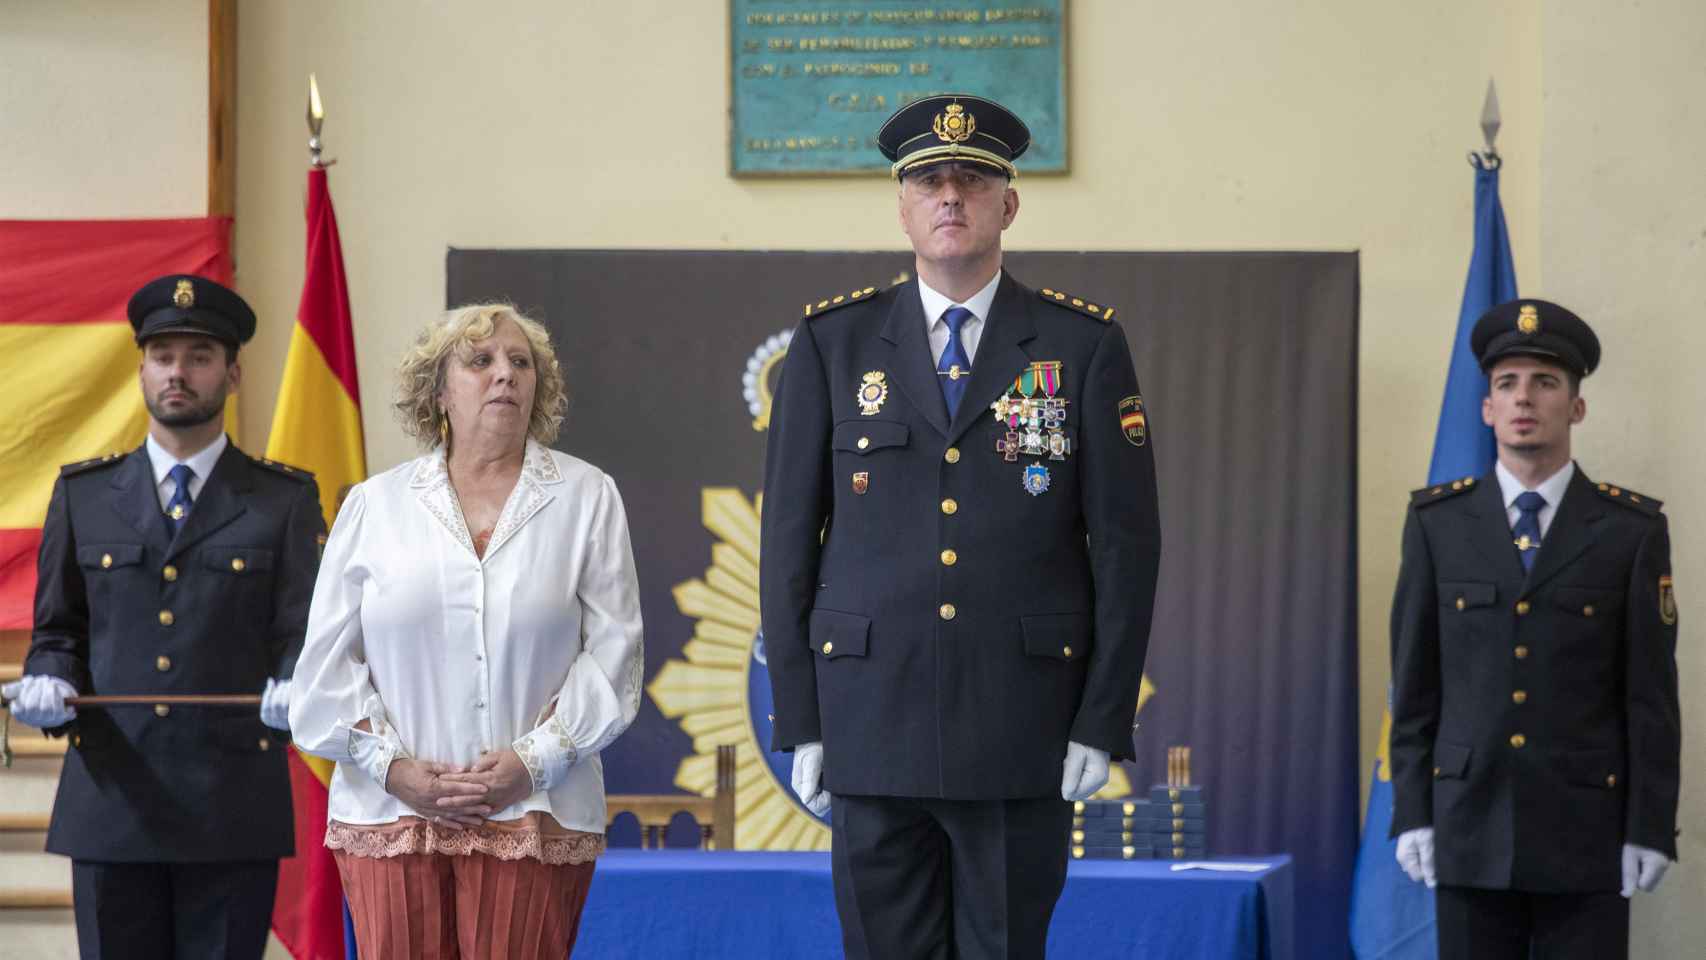 Festividad de la Policia Nacional de Salamanca